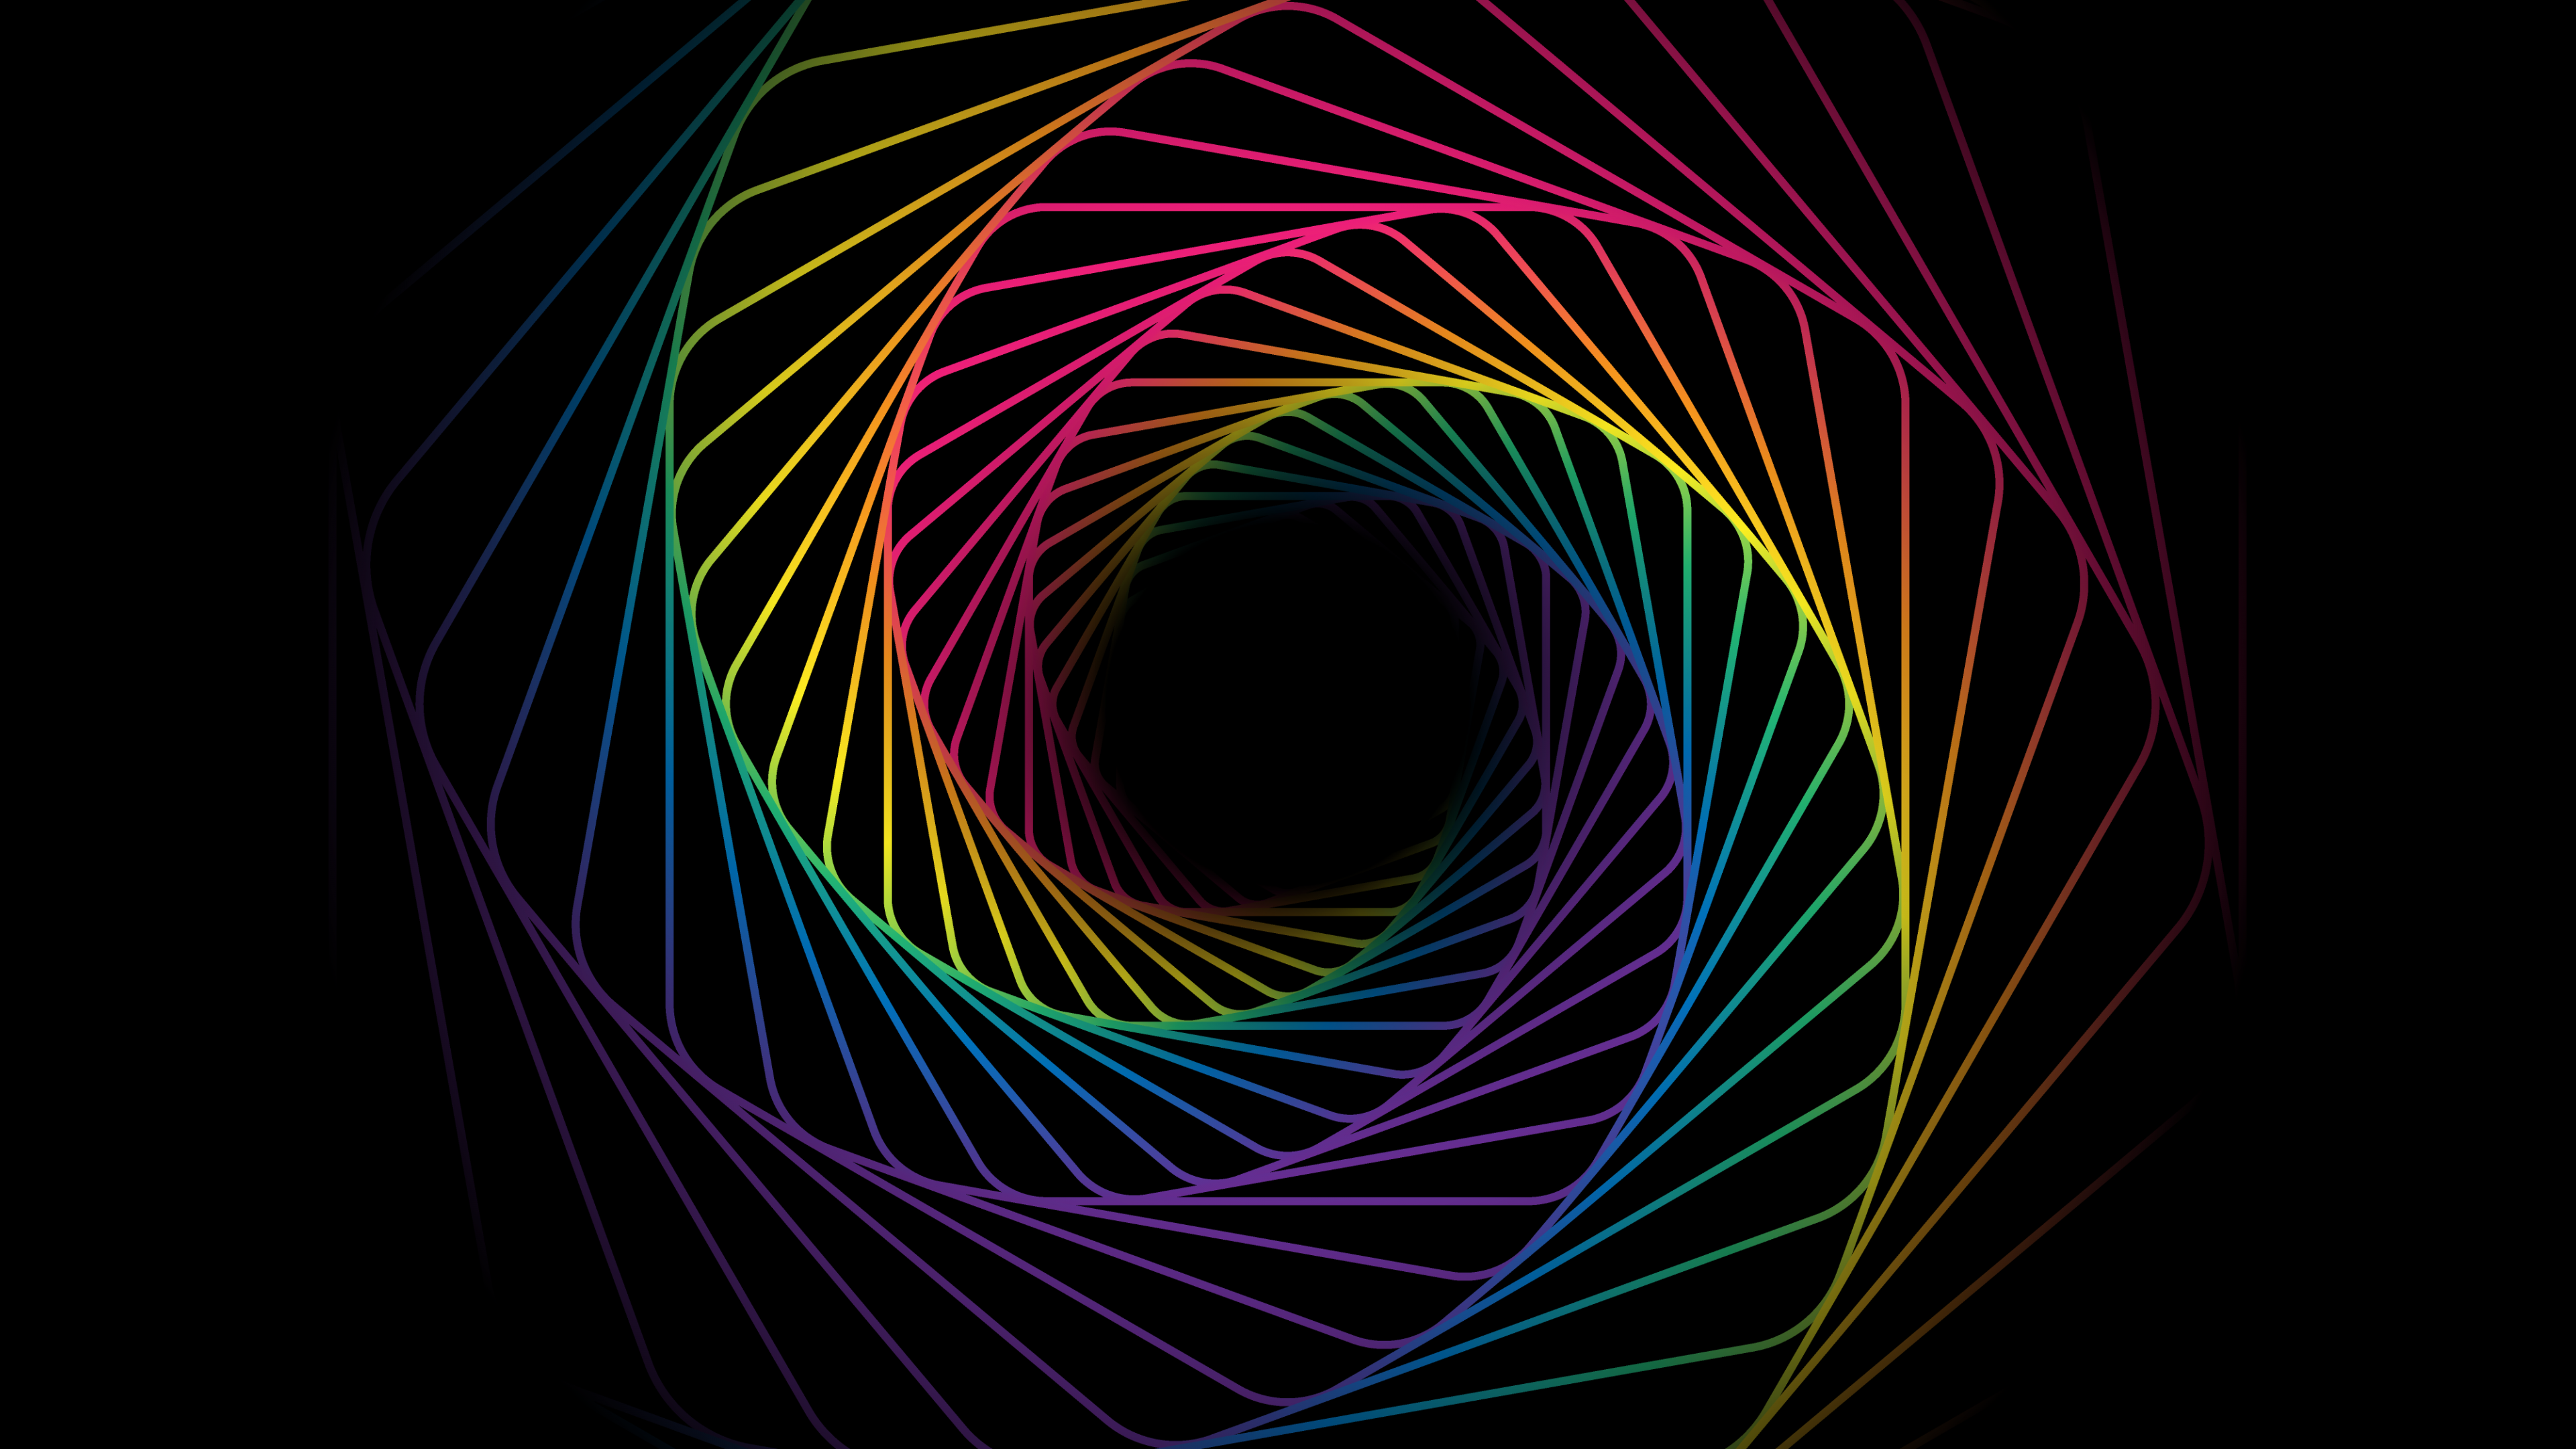 Cosmic Wallpaper 4K, Rainbow, Swirl, Spiral, Black background, Abstract